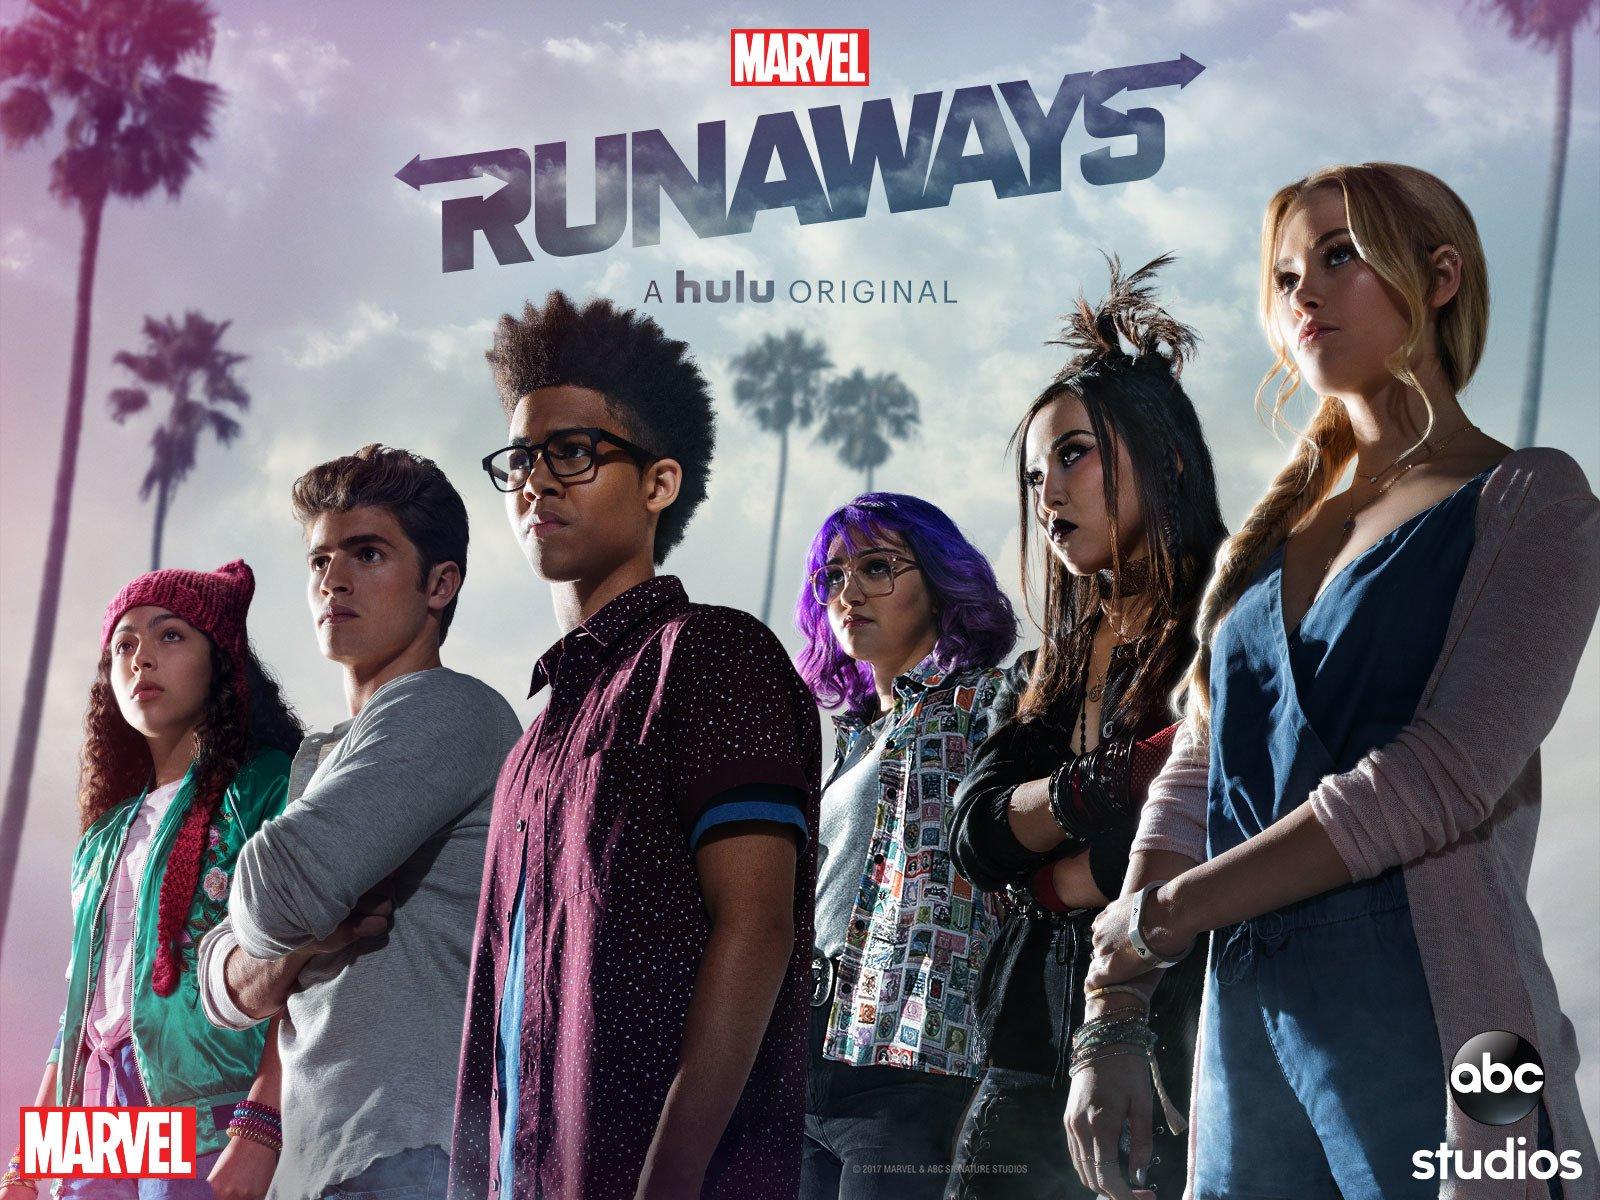 Amazon.co.uk: Watch Marvel's Runaways Season 1